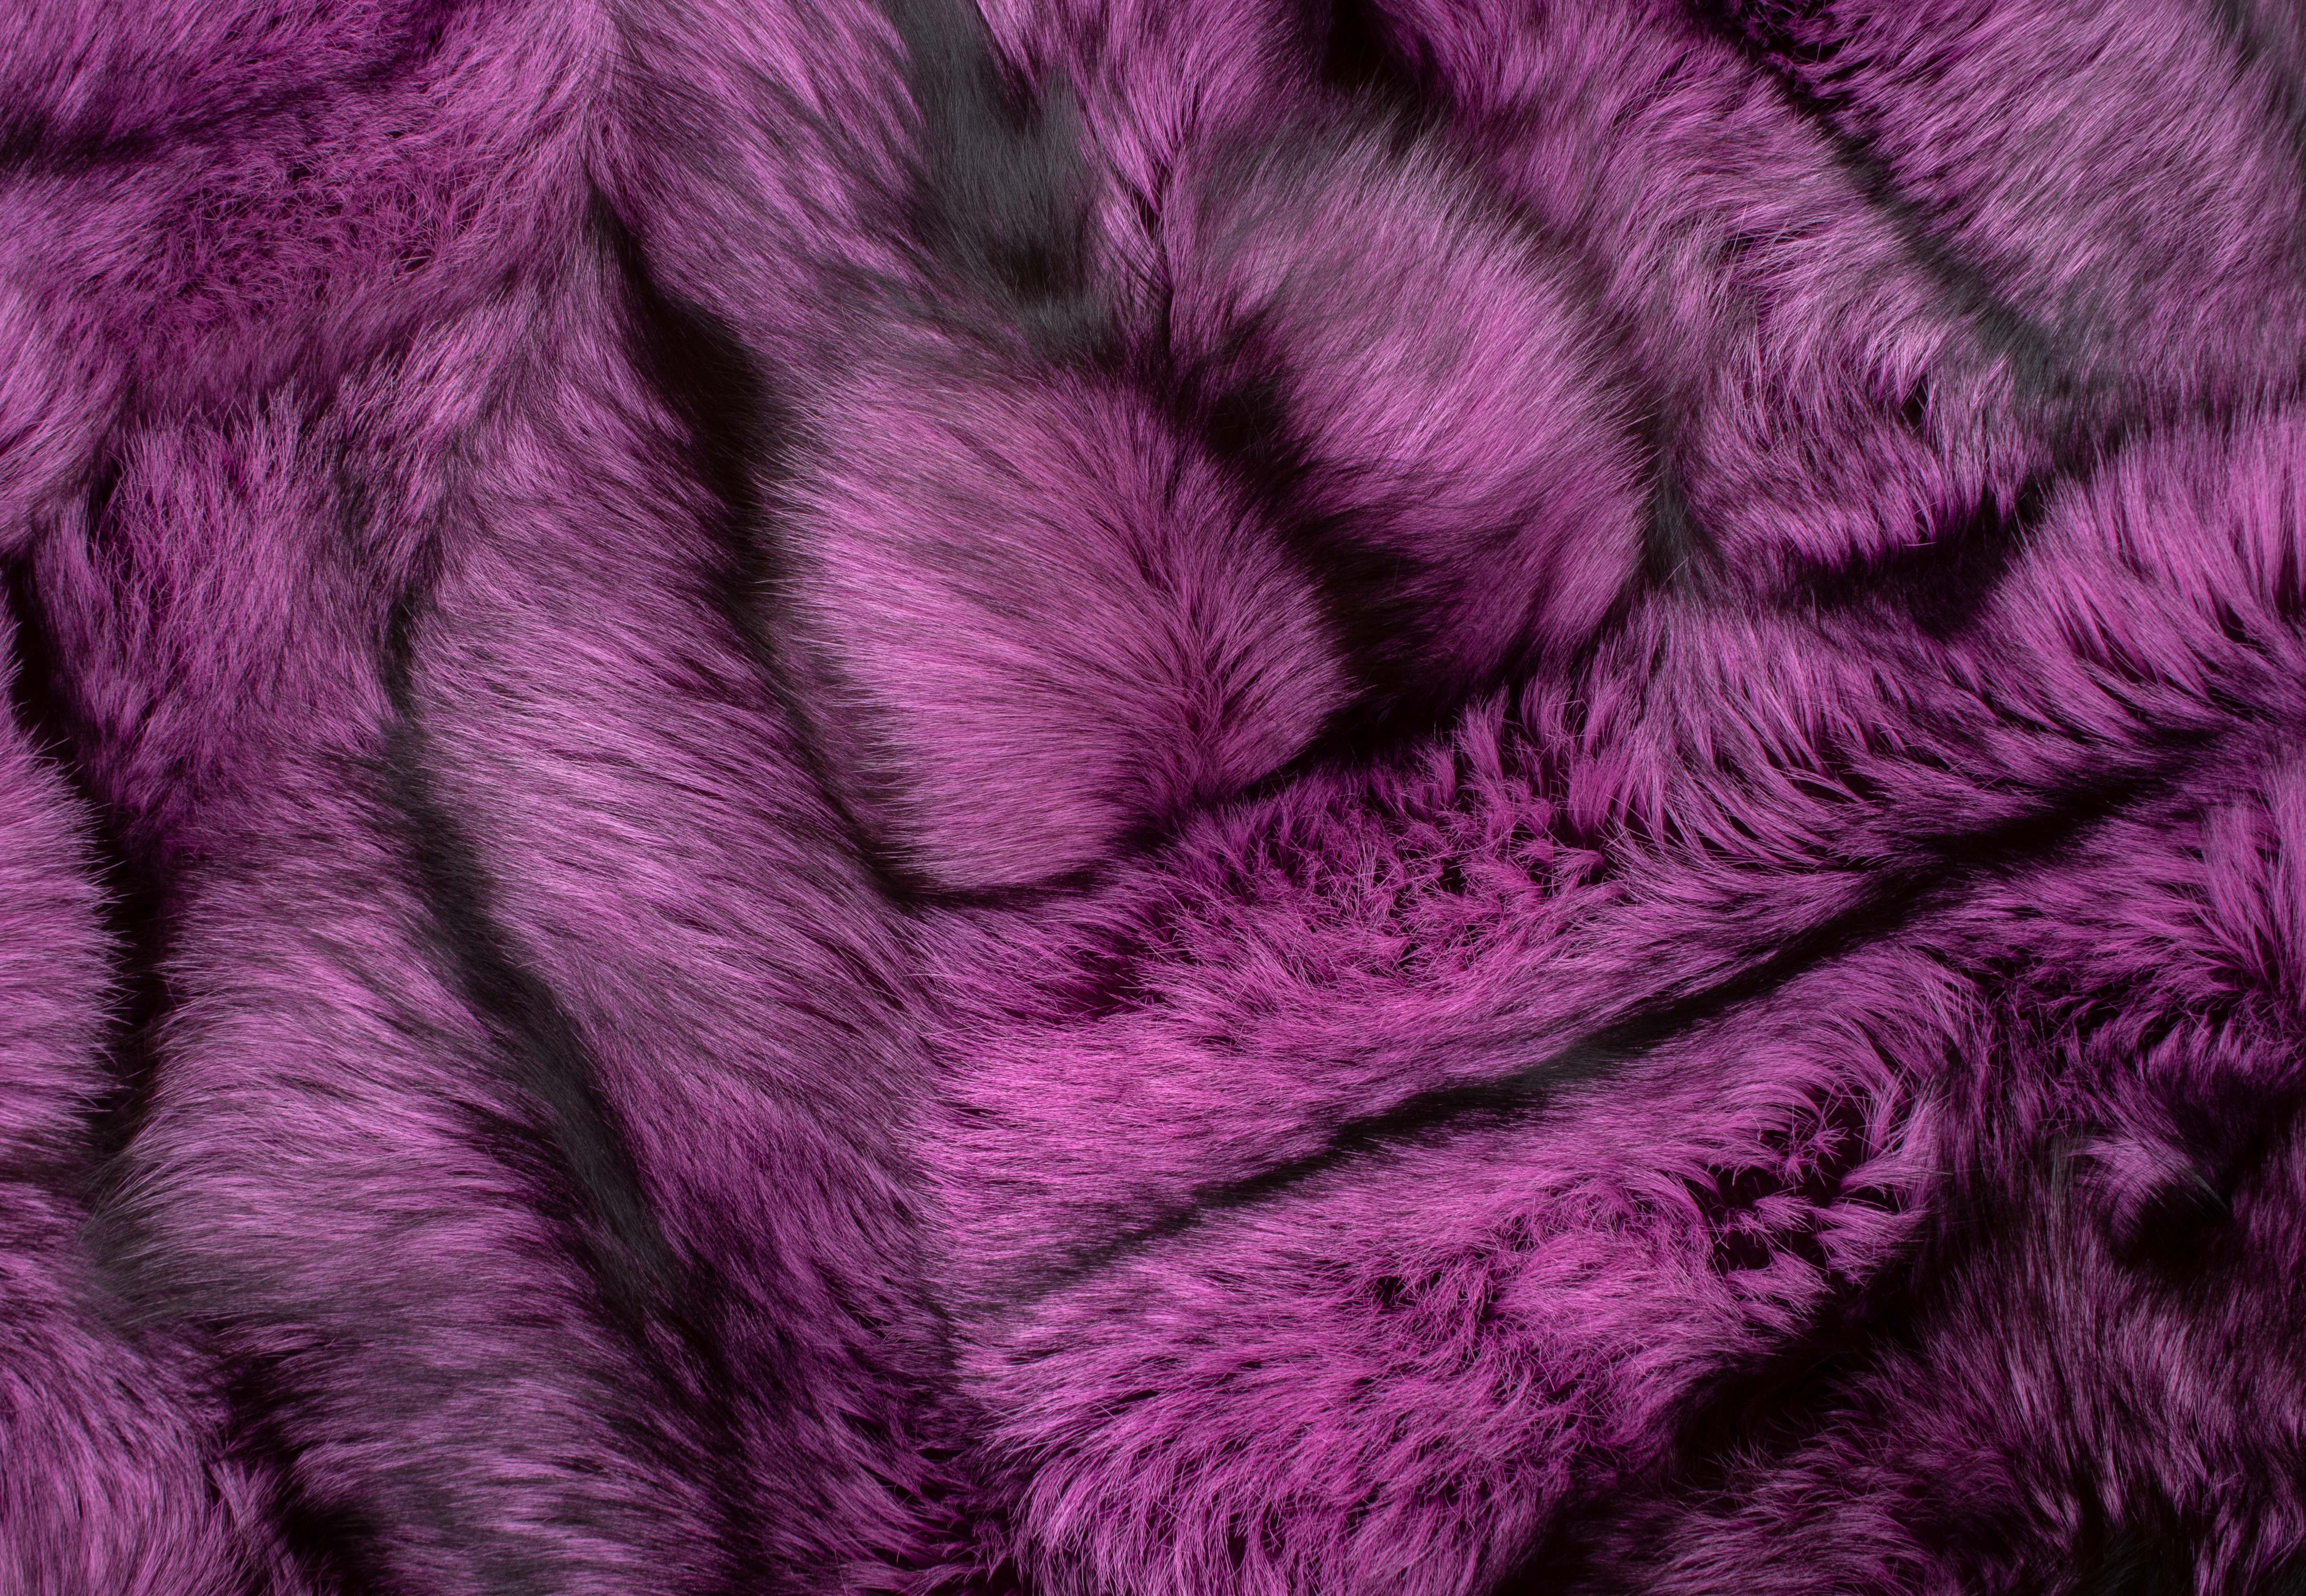 Silver Fox Rug in purple